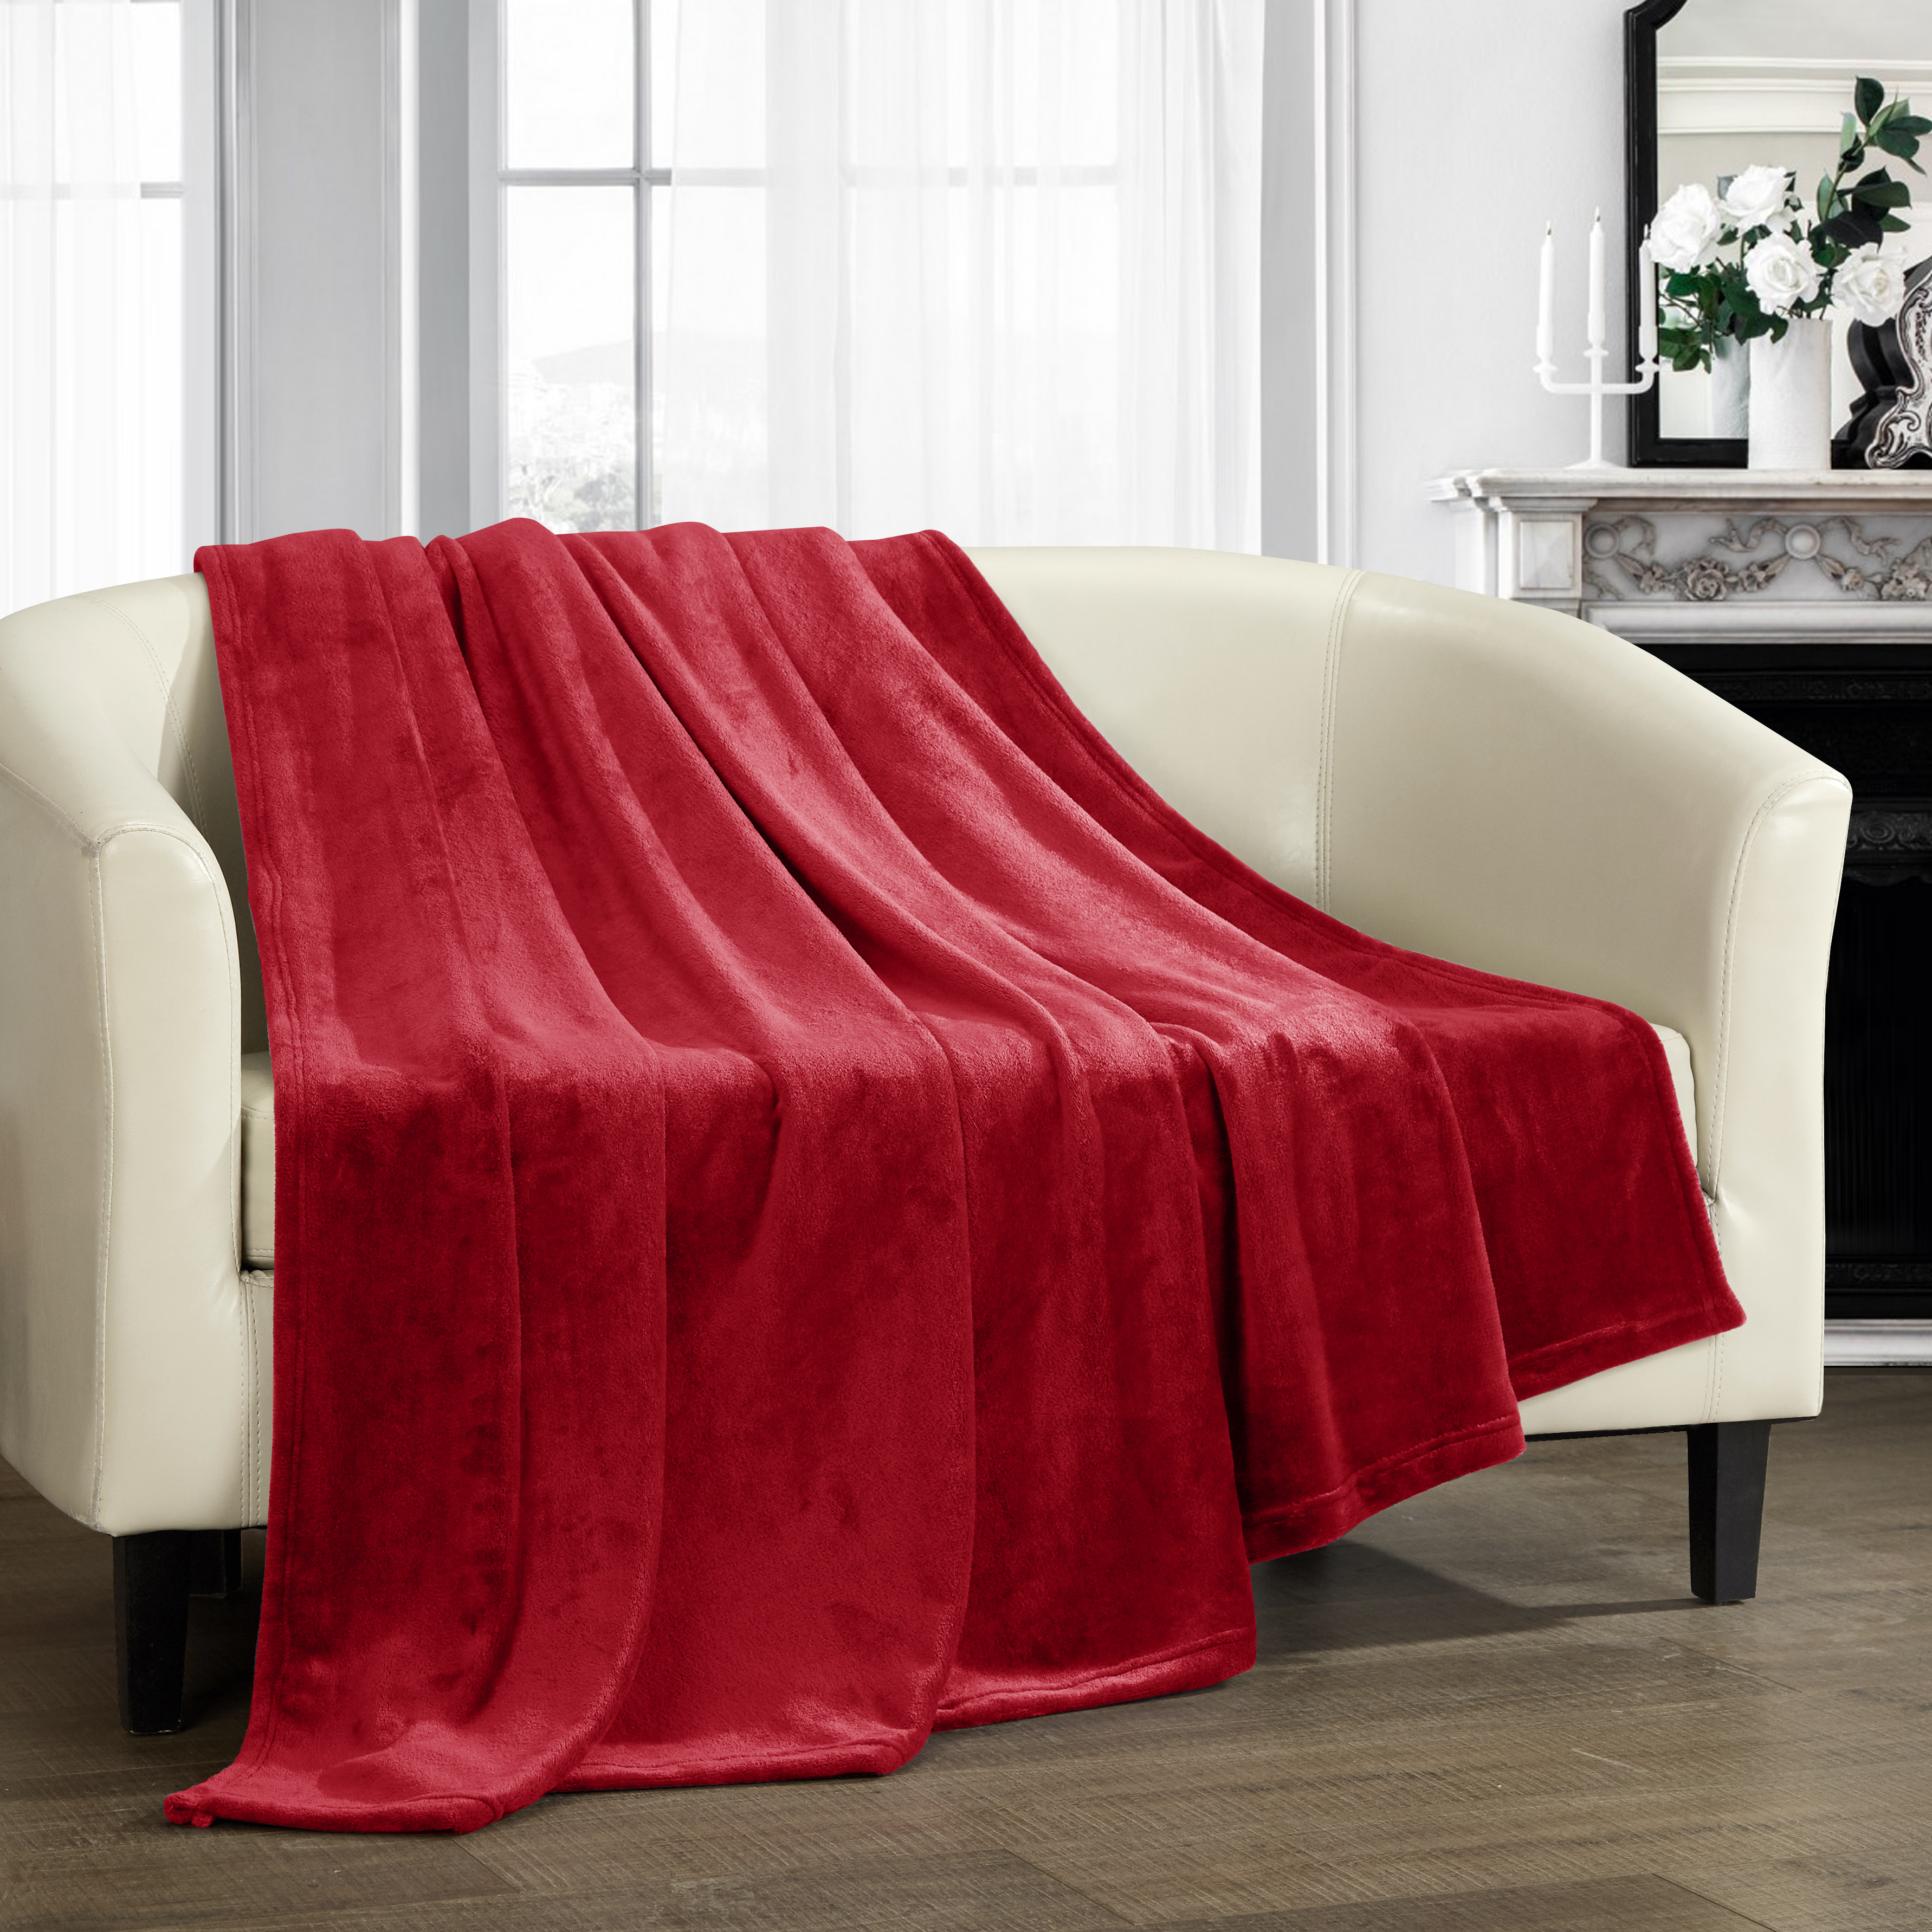 Kaeden Throw Blanket Cozy Super Soft Ultra Plush Micro Mink Fleece Decorative Design - Red